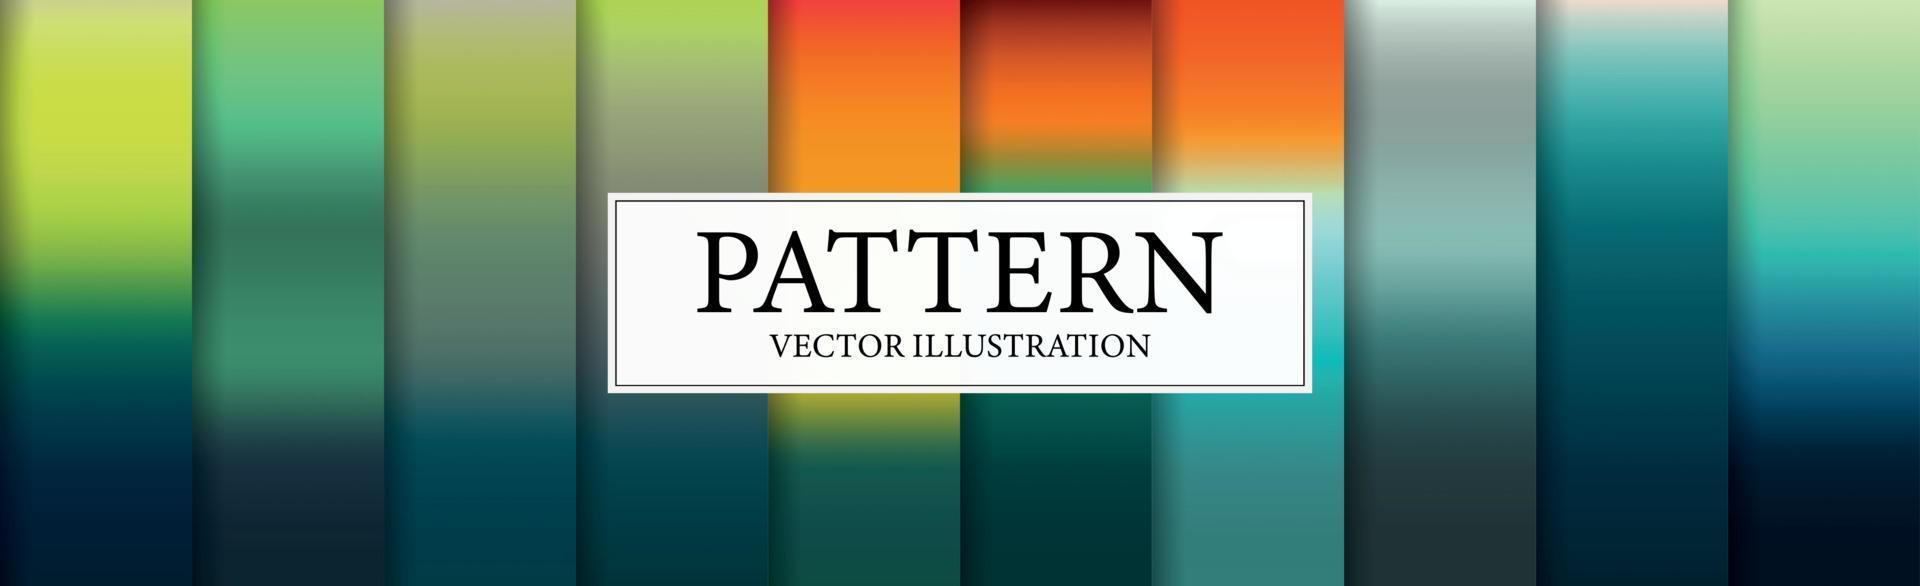 Set of 10 different gradient texture backgrounds - Vector